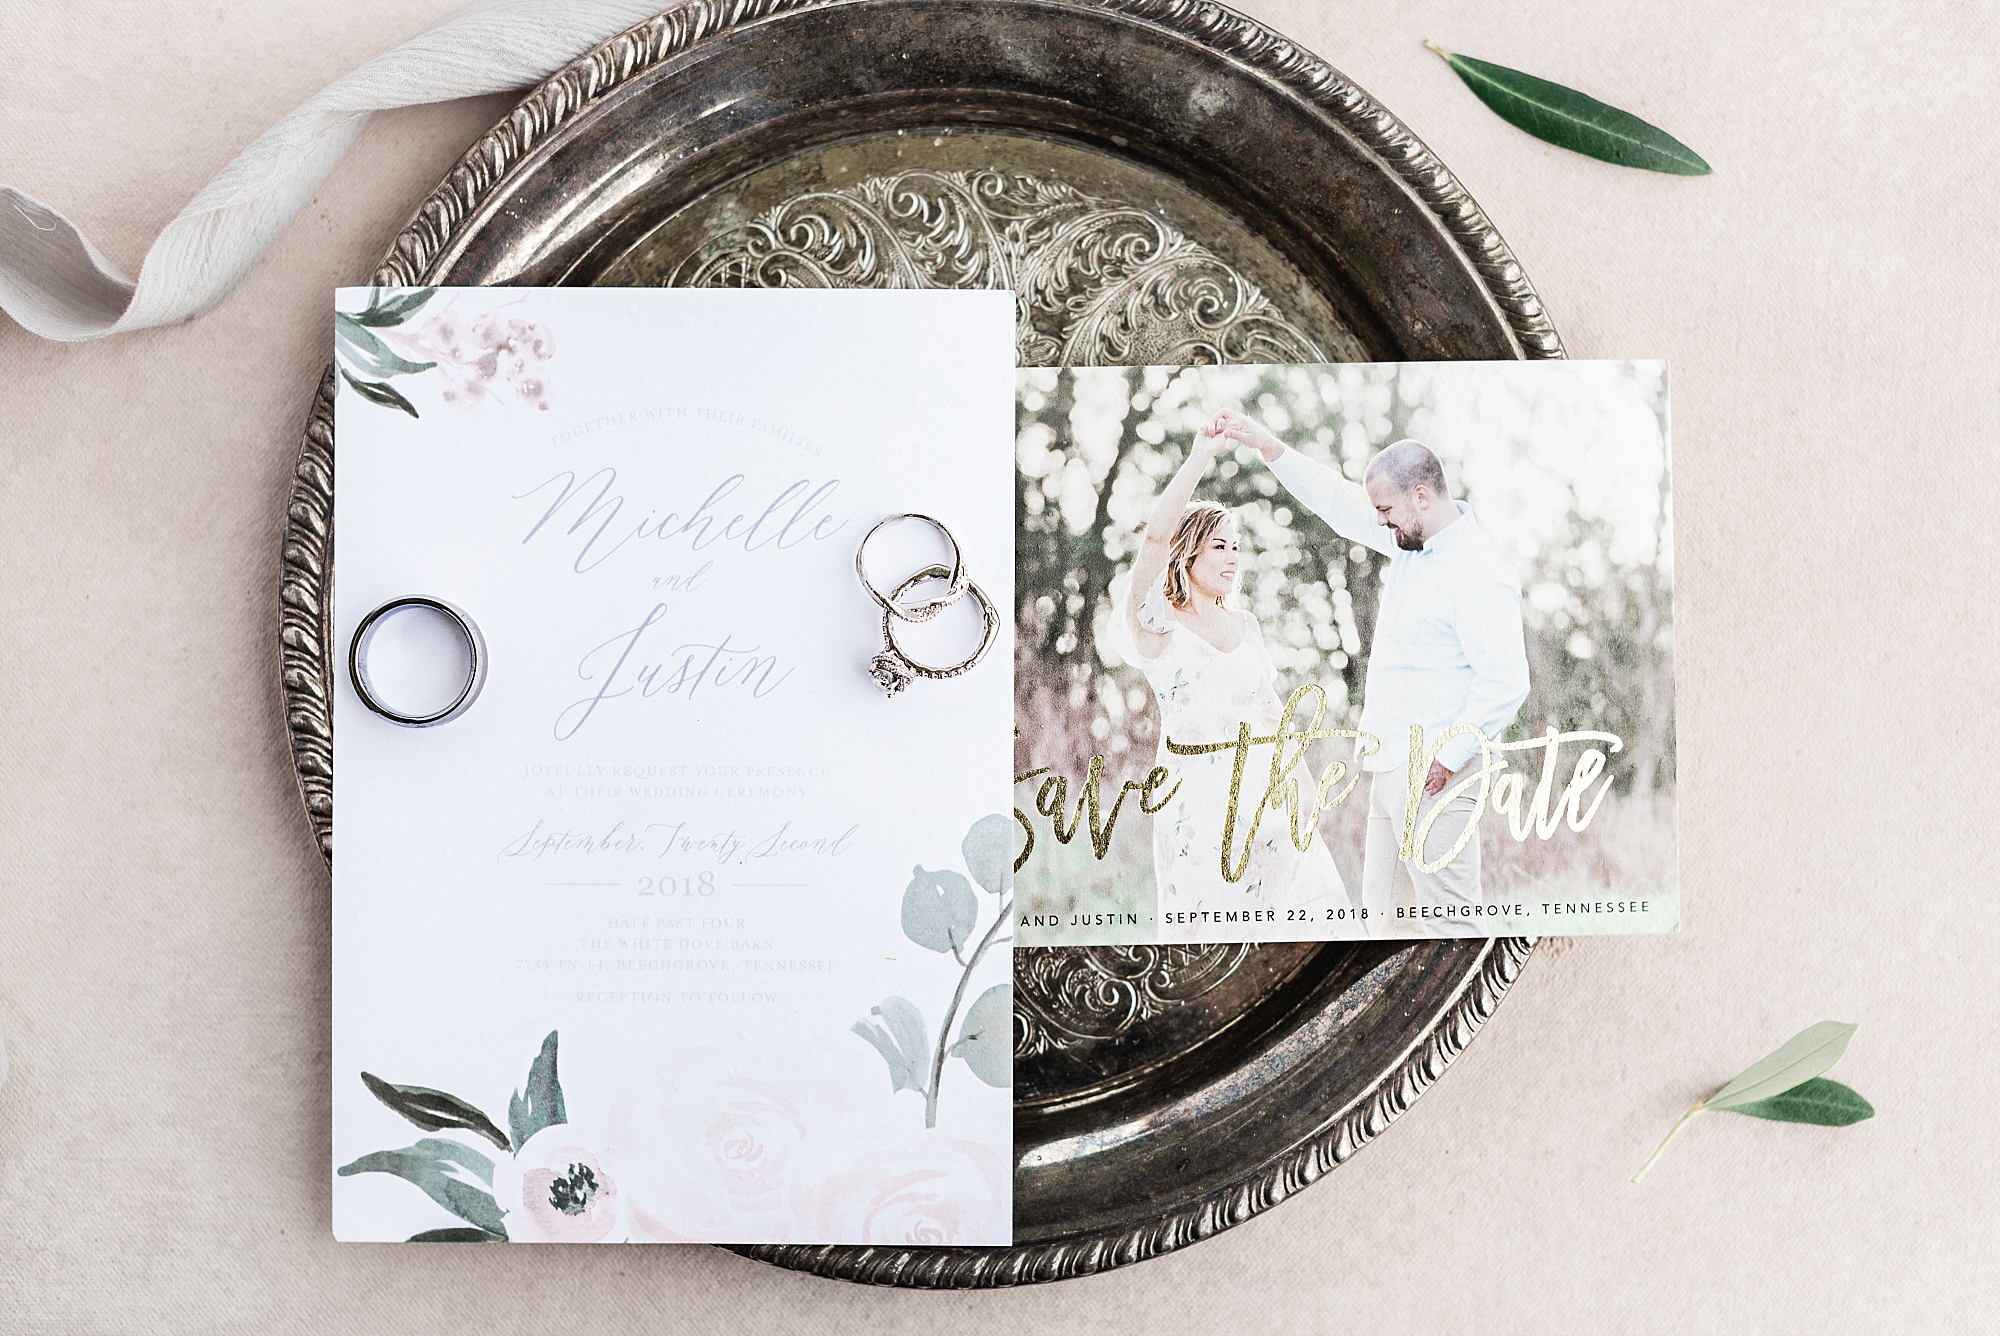 wedding rings invitations bride details